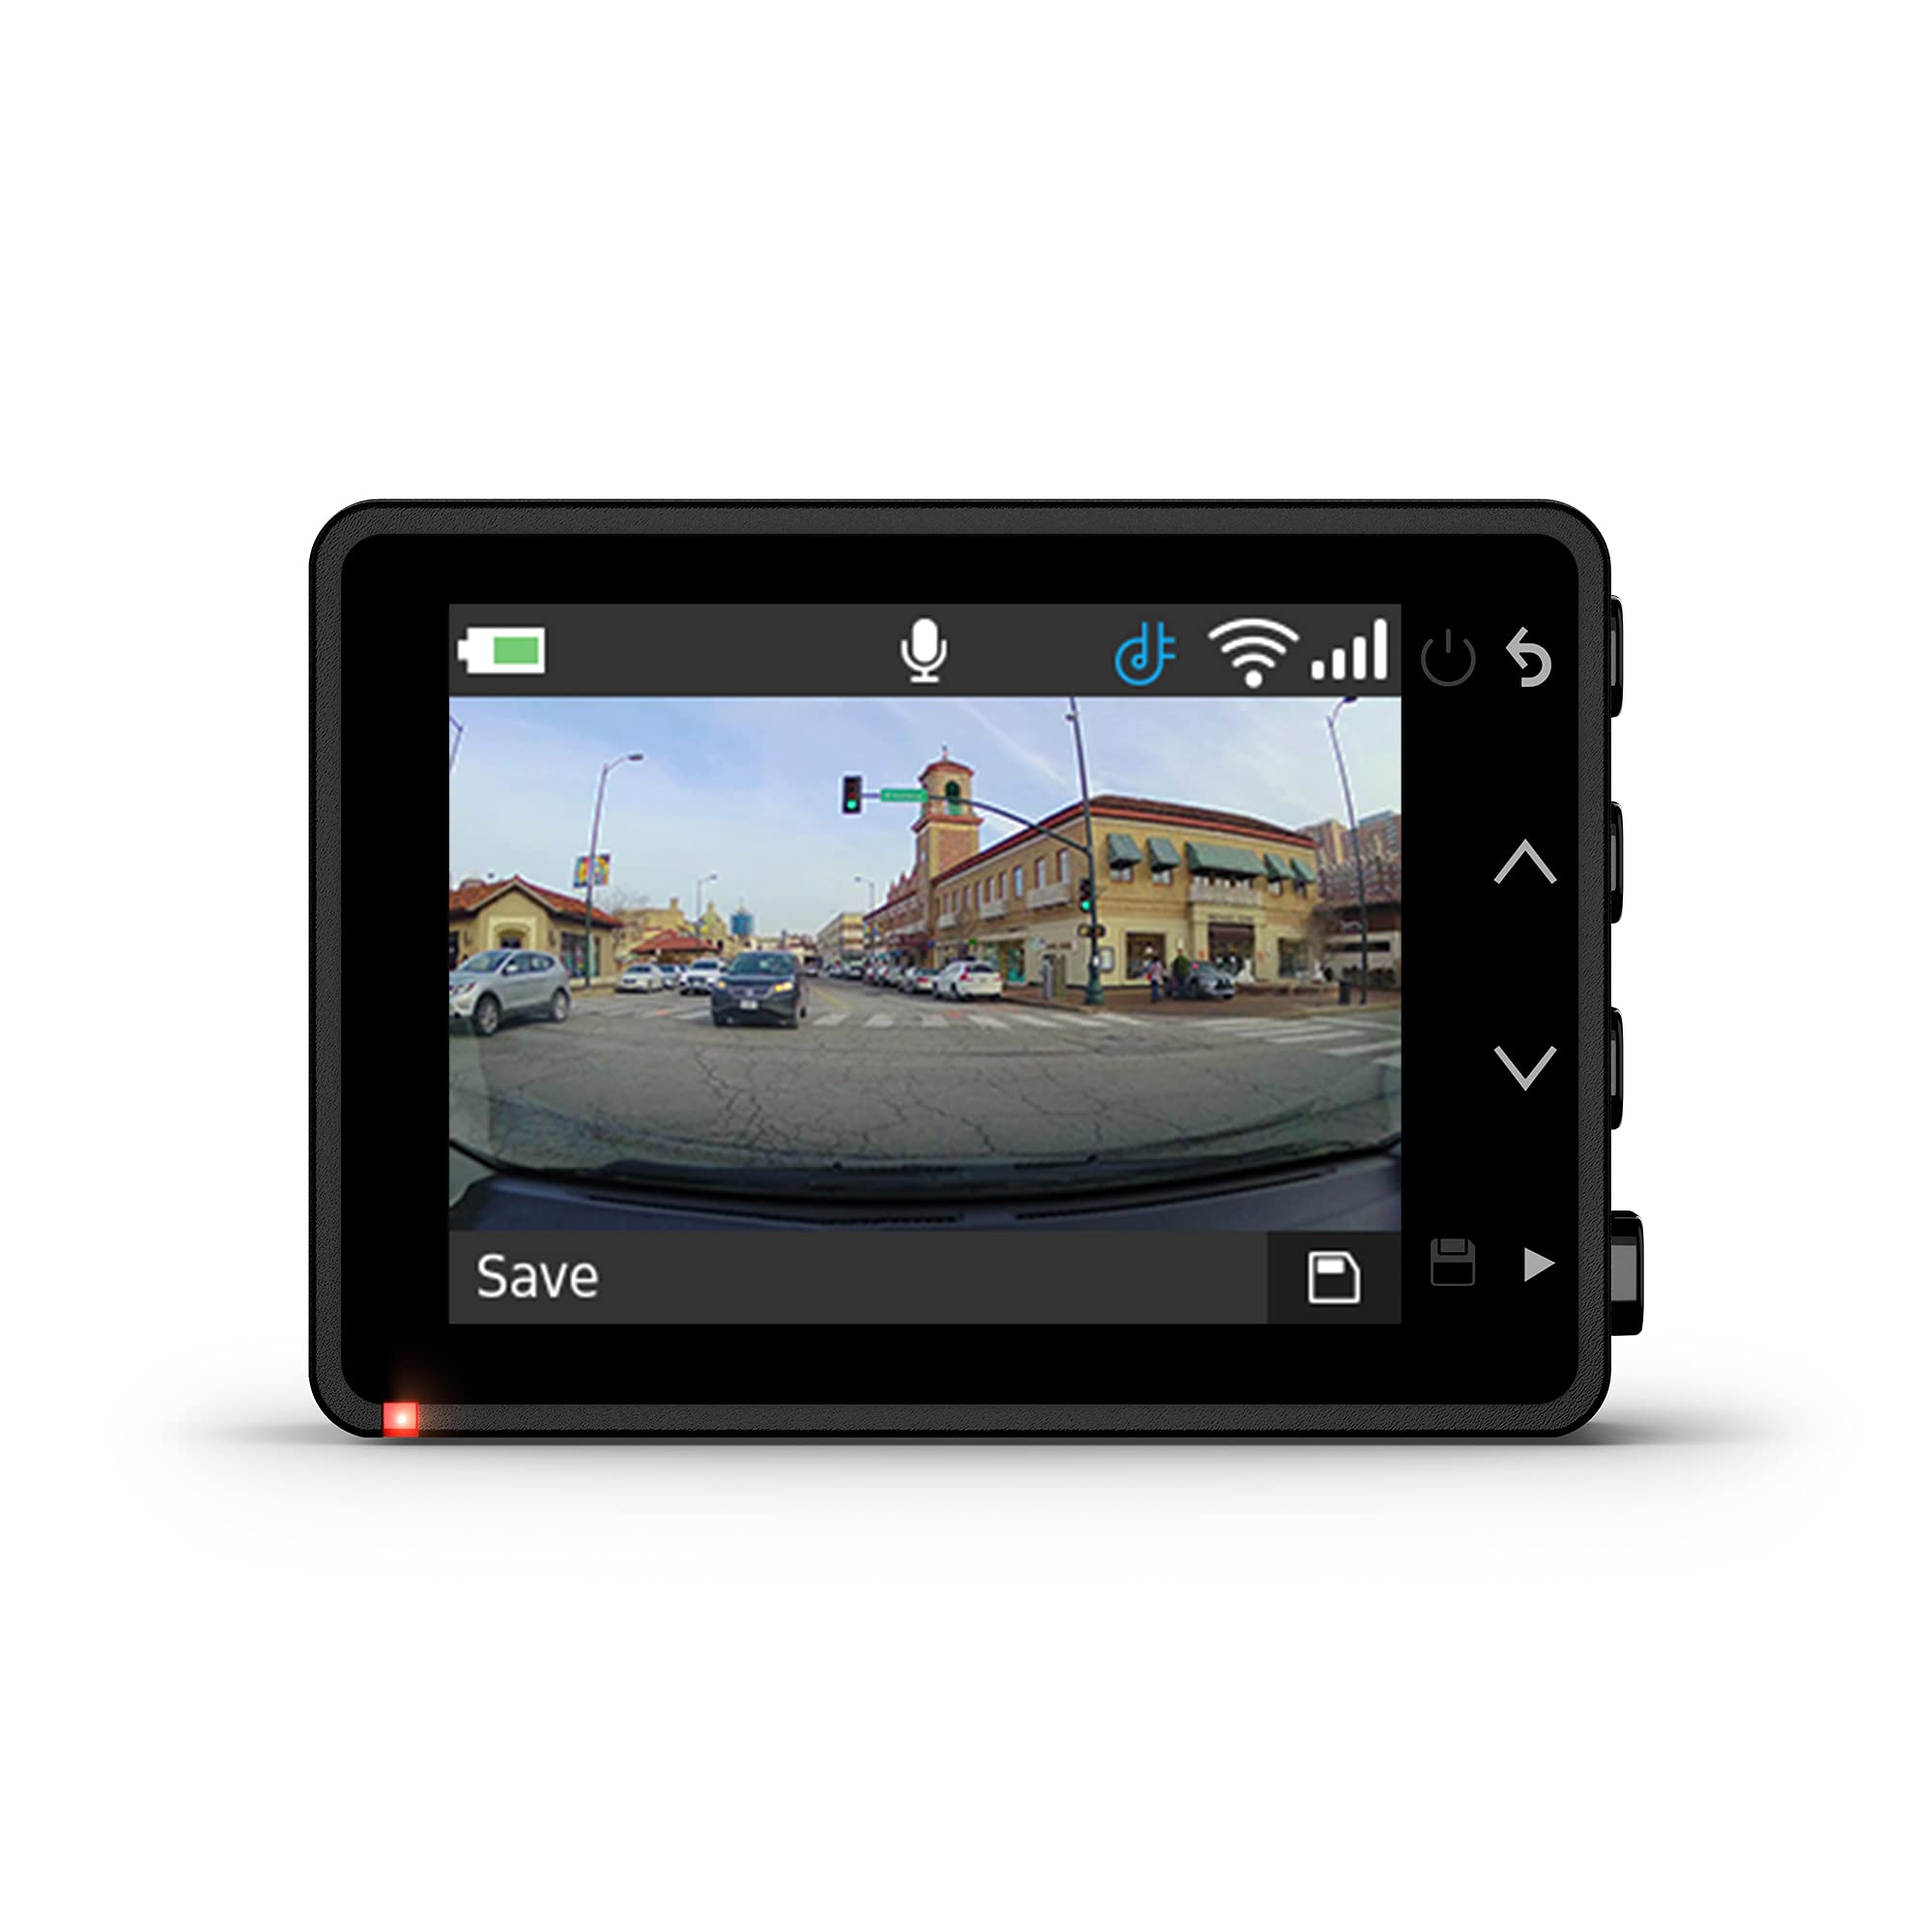 Garmin Dash Cam 57, 1440p and 140-degree FOV, Voice Control, Compact and Discreet, Includes Memory Card